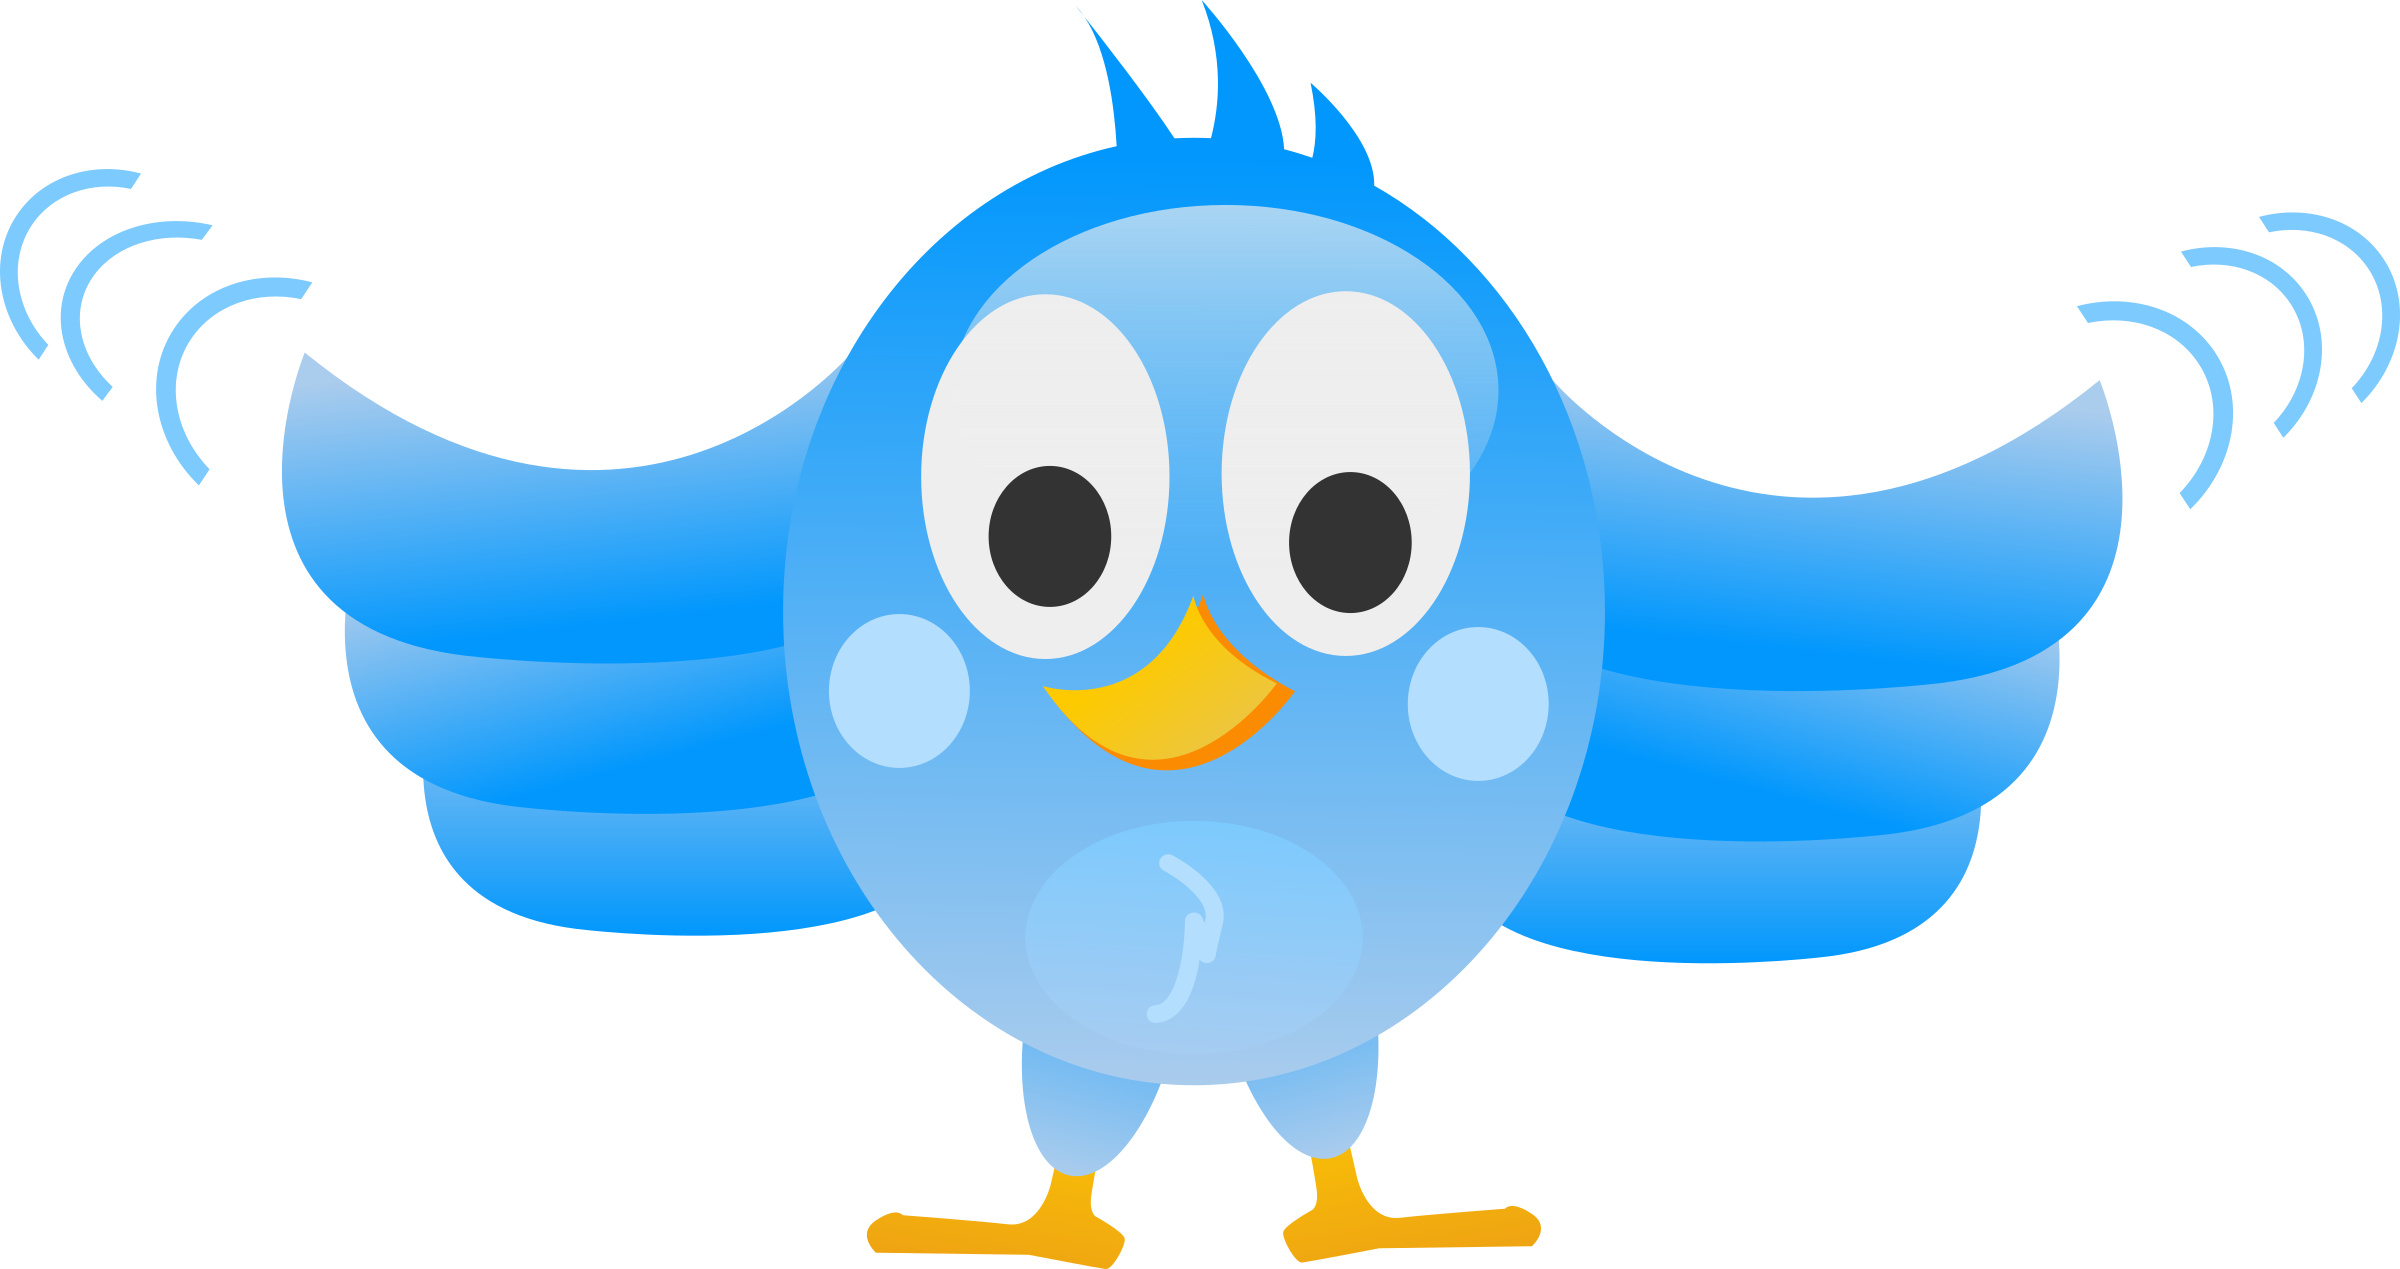 Wing clipart animated. Tweet bird big image